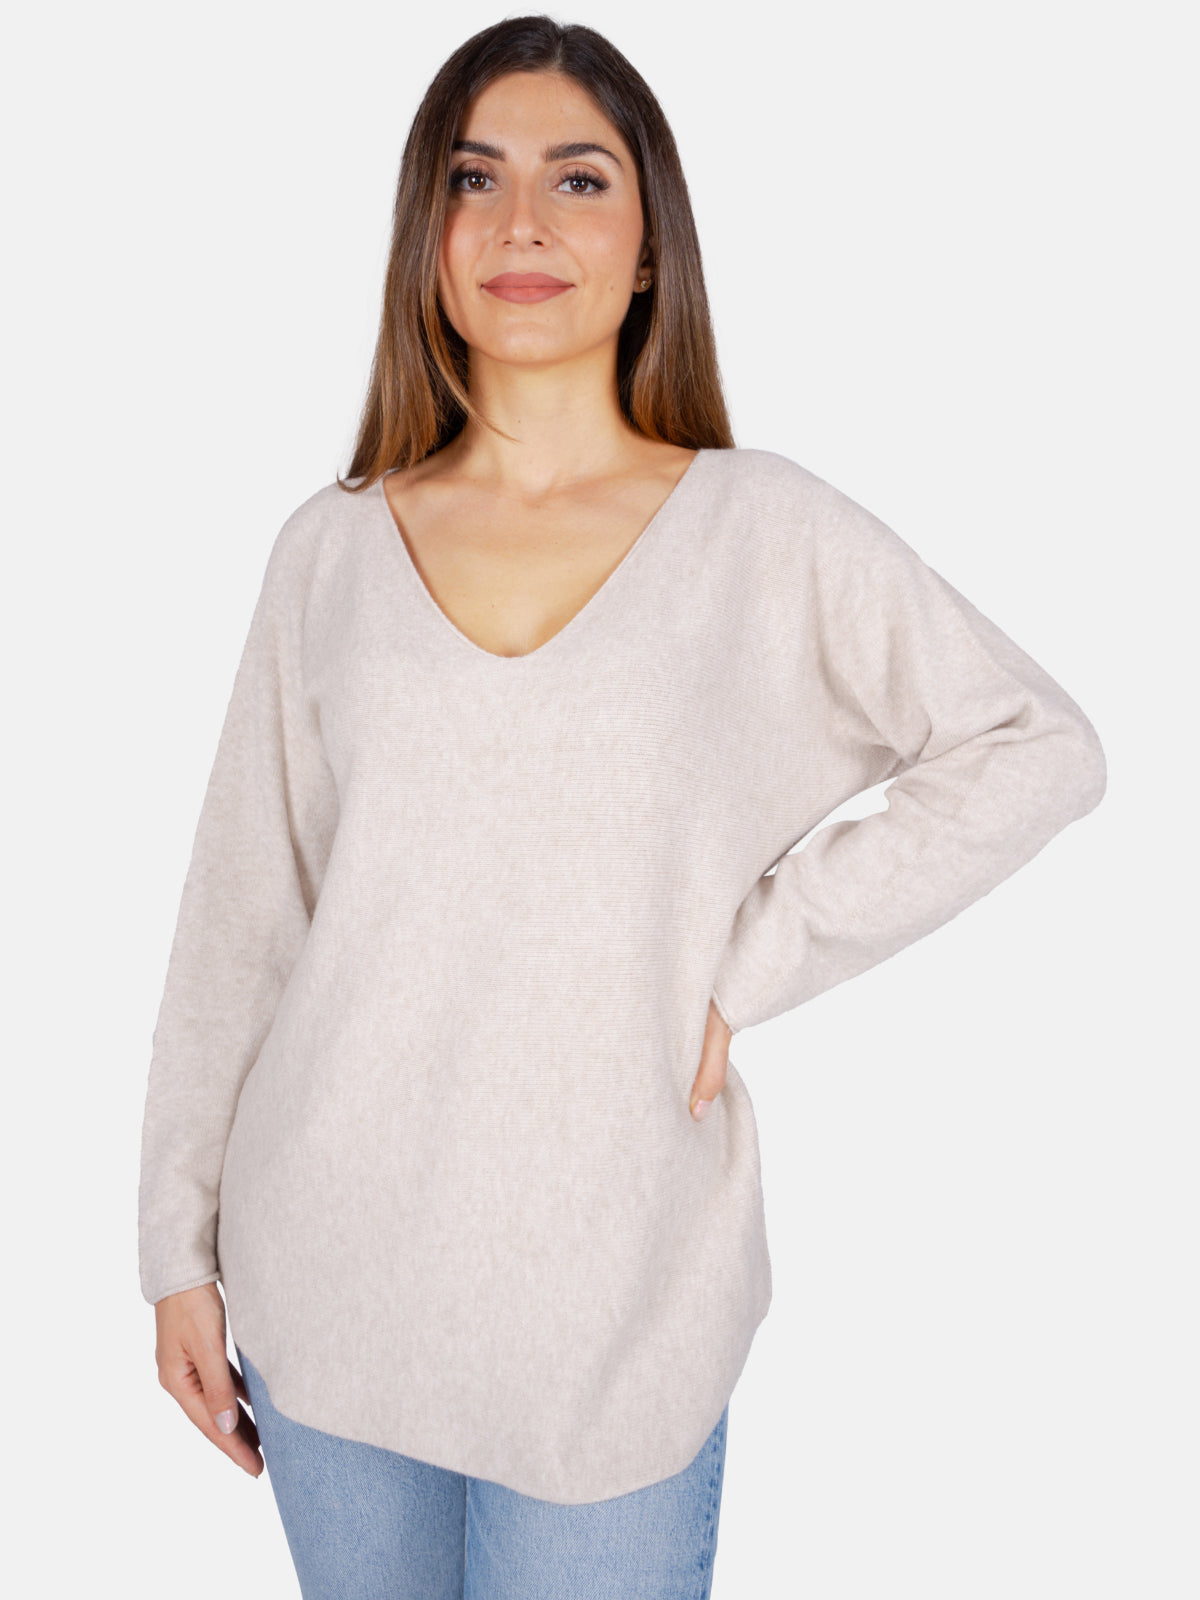 Pullover mit V-Ausschnitt - mehrere Farben - Lara